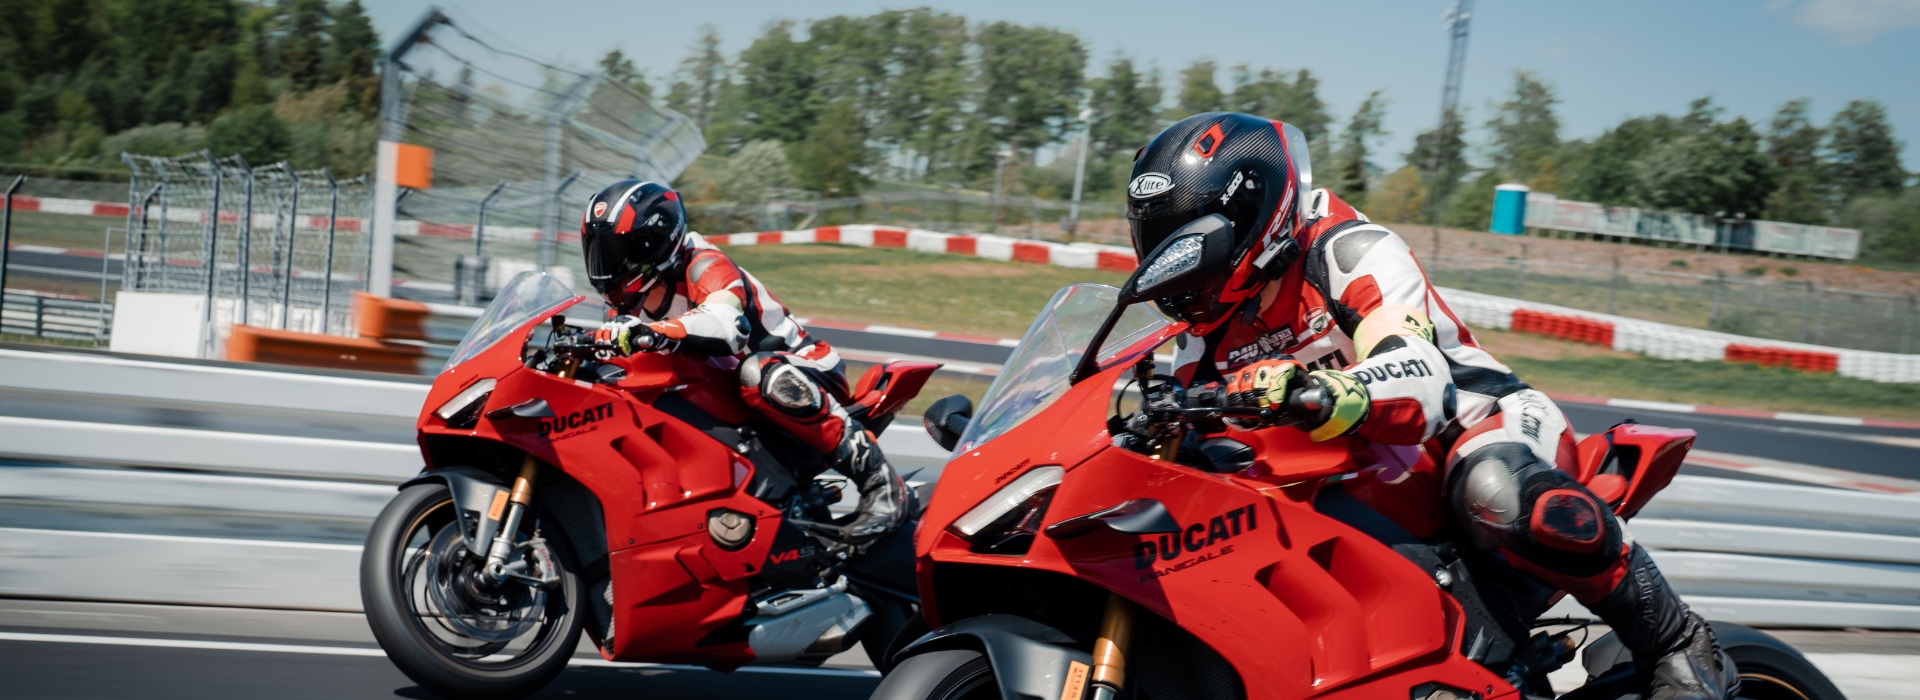 Ducati4you - Rennstrecken Handling